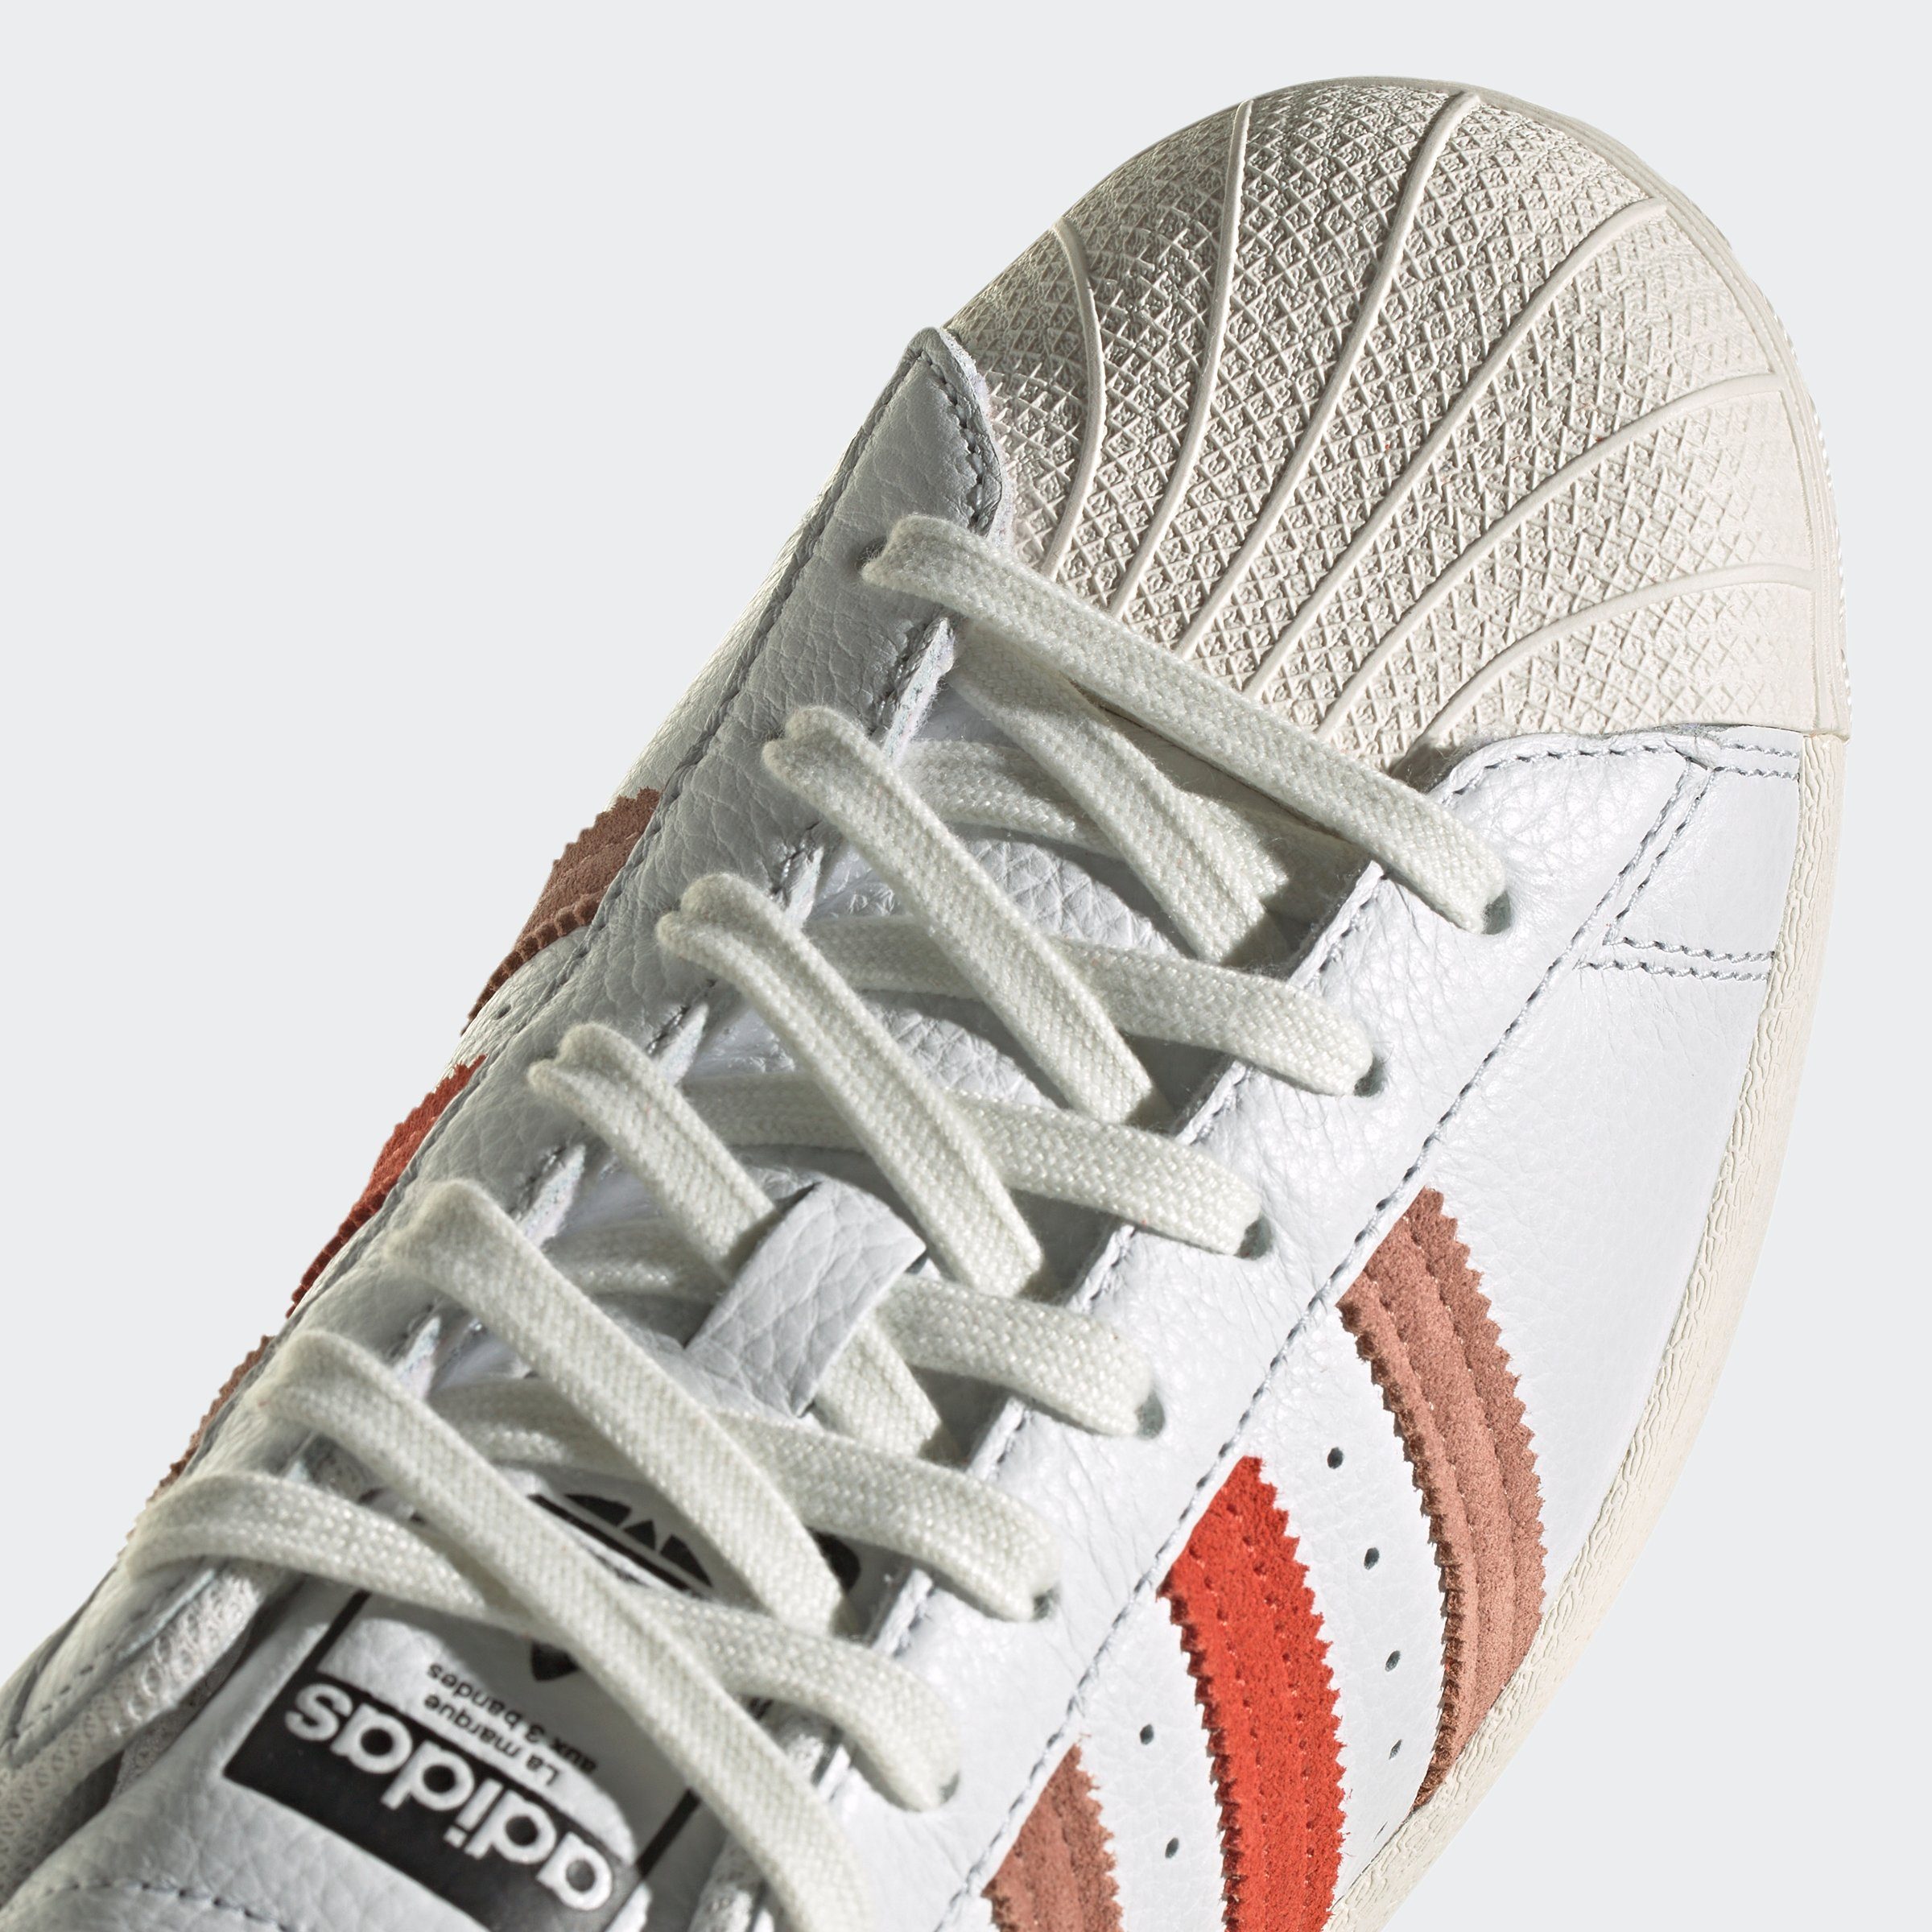 White / Clay Originals adidas SUPERSTAR Sneaker Crystal / Strata Red Preloved